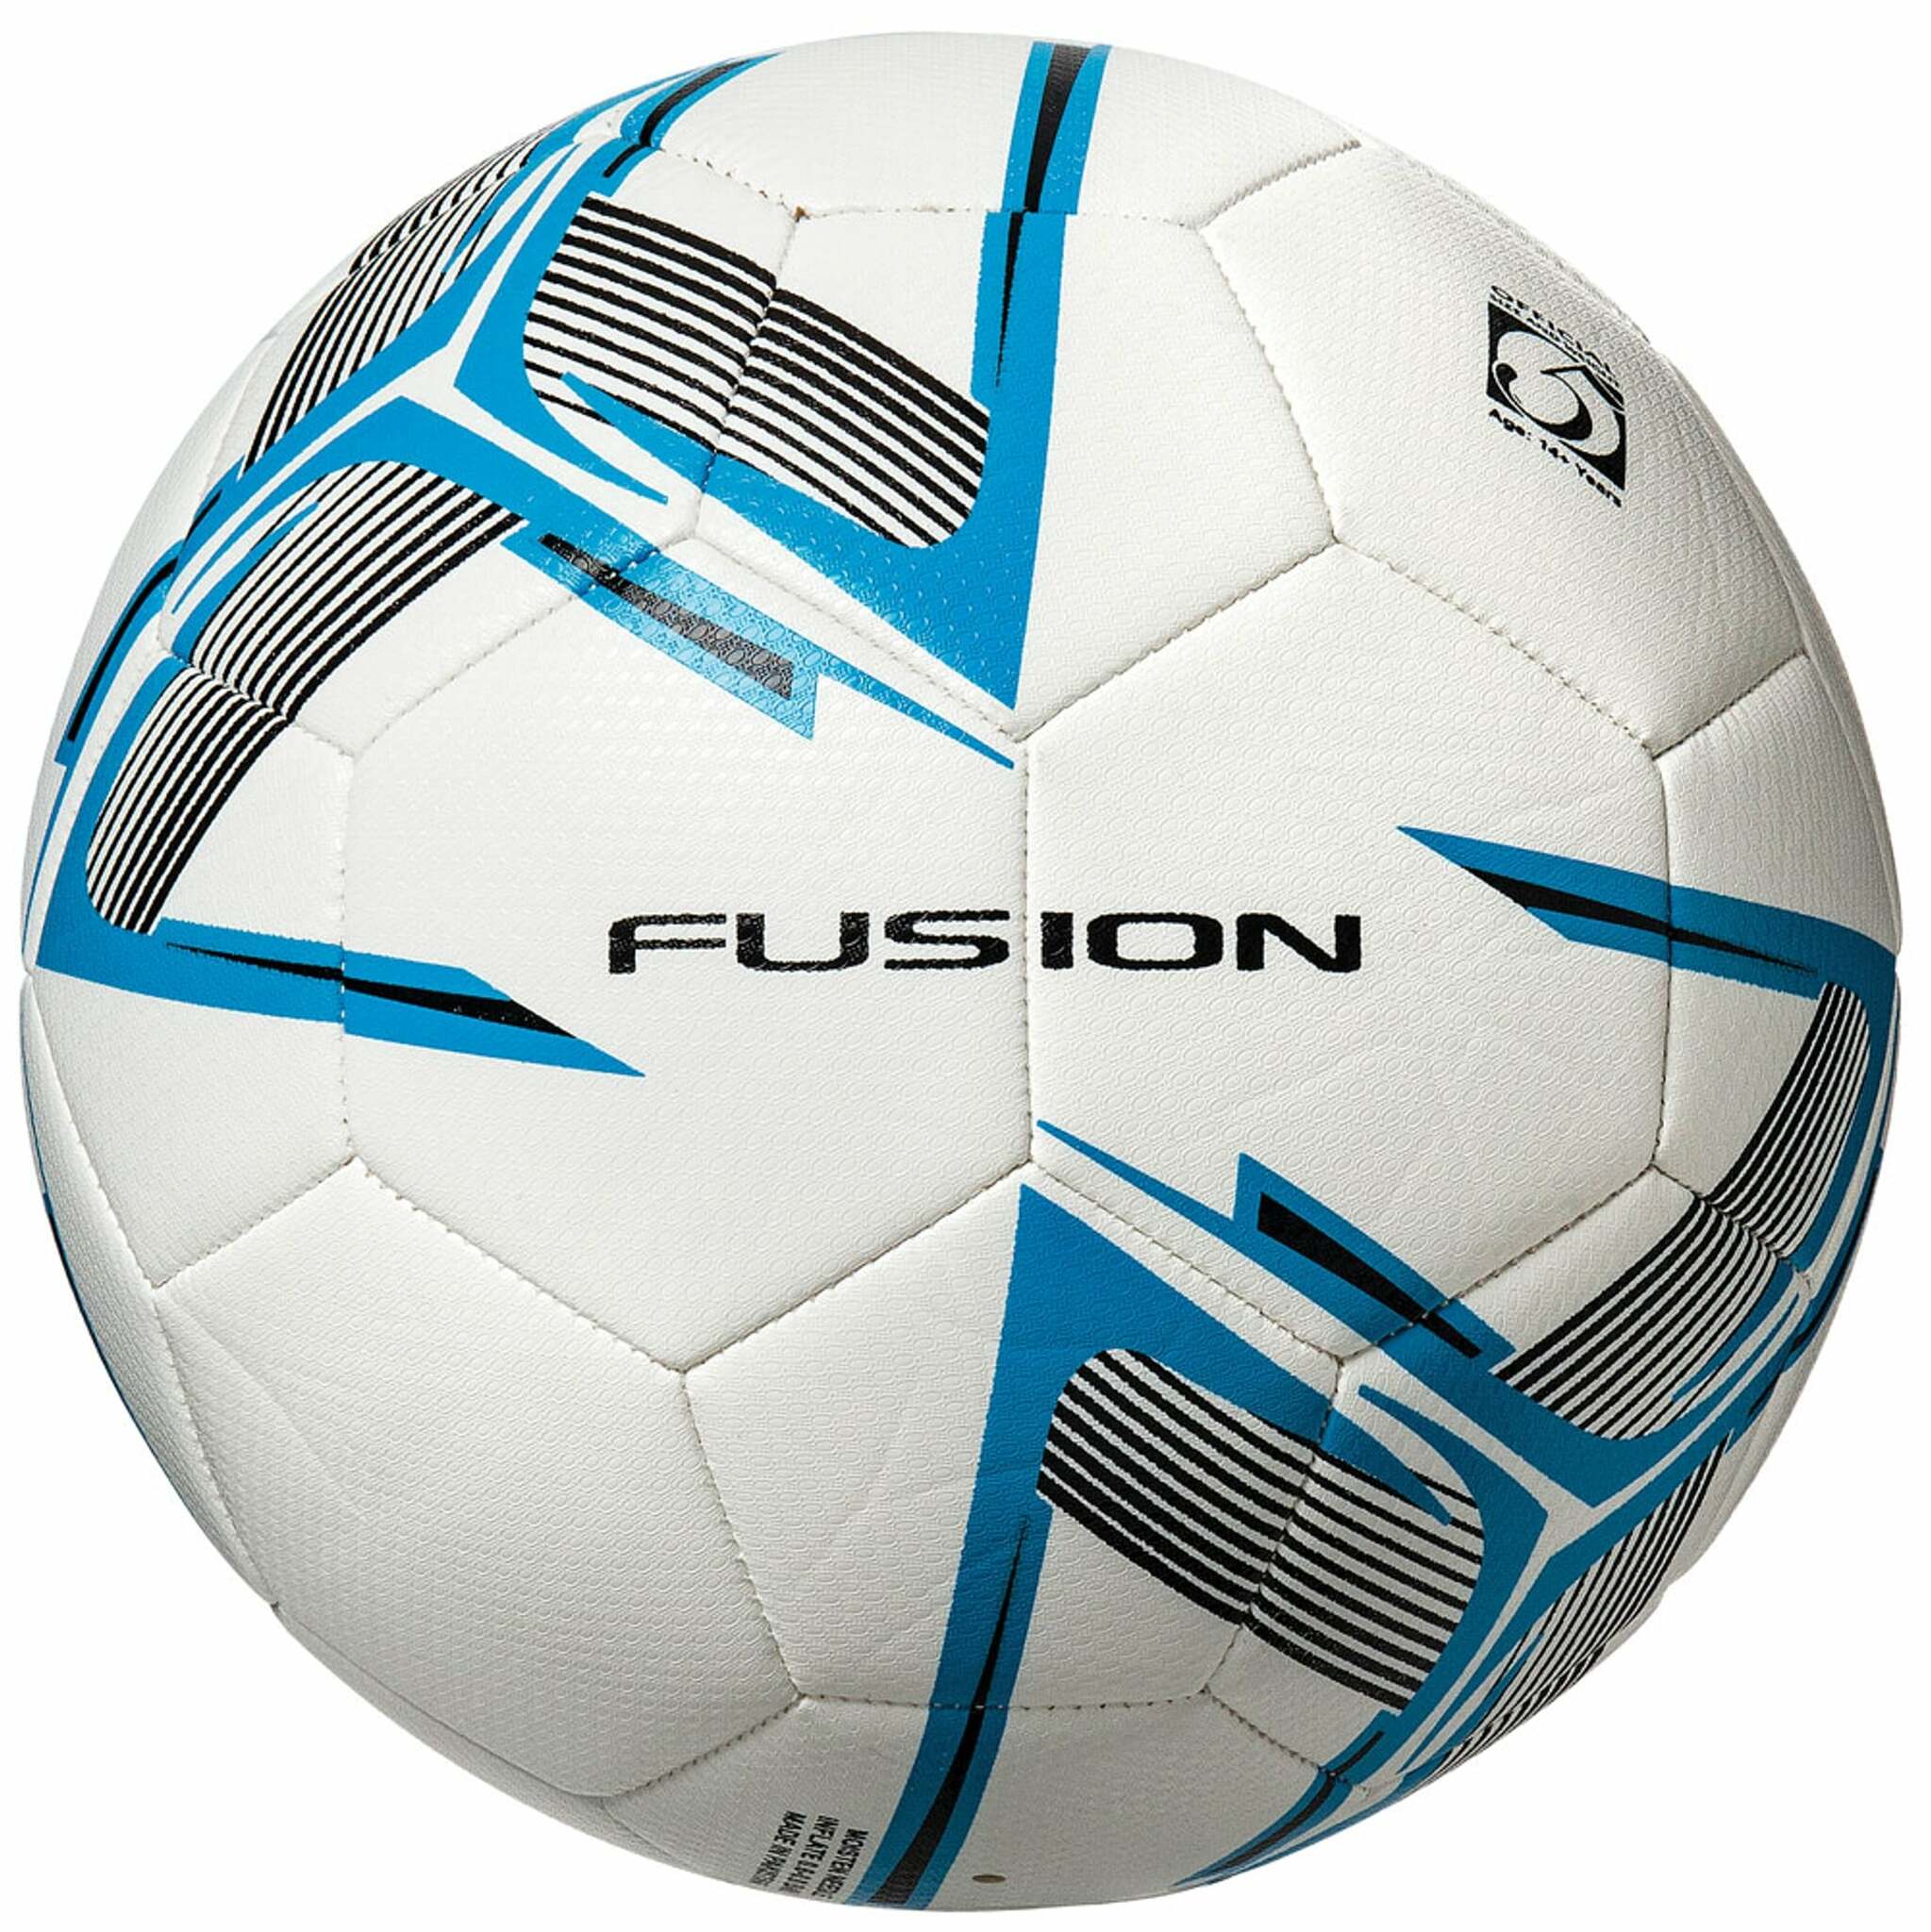 Se Fusion træningsfodbold - Precision hos Sportnordica.dk